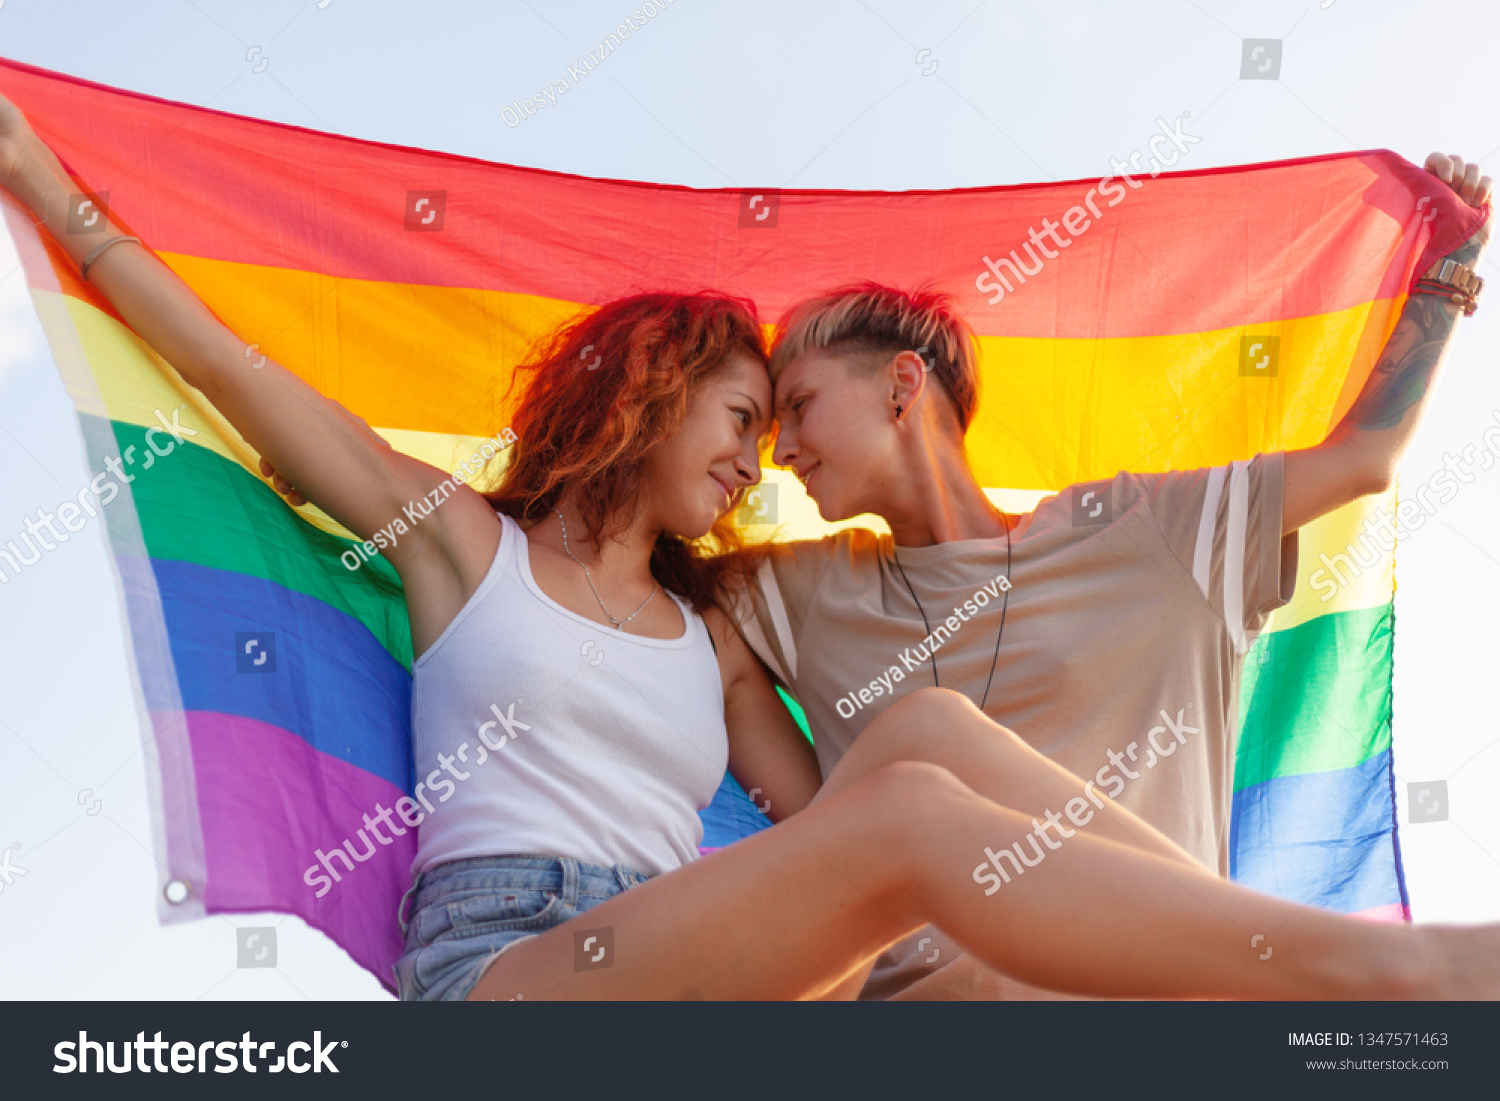 Gorgeous Lesbian Pics